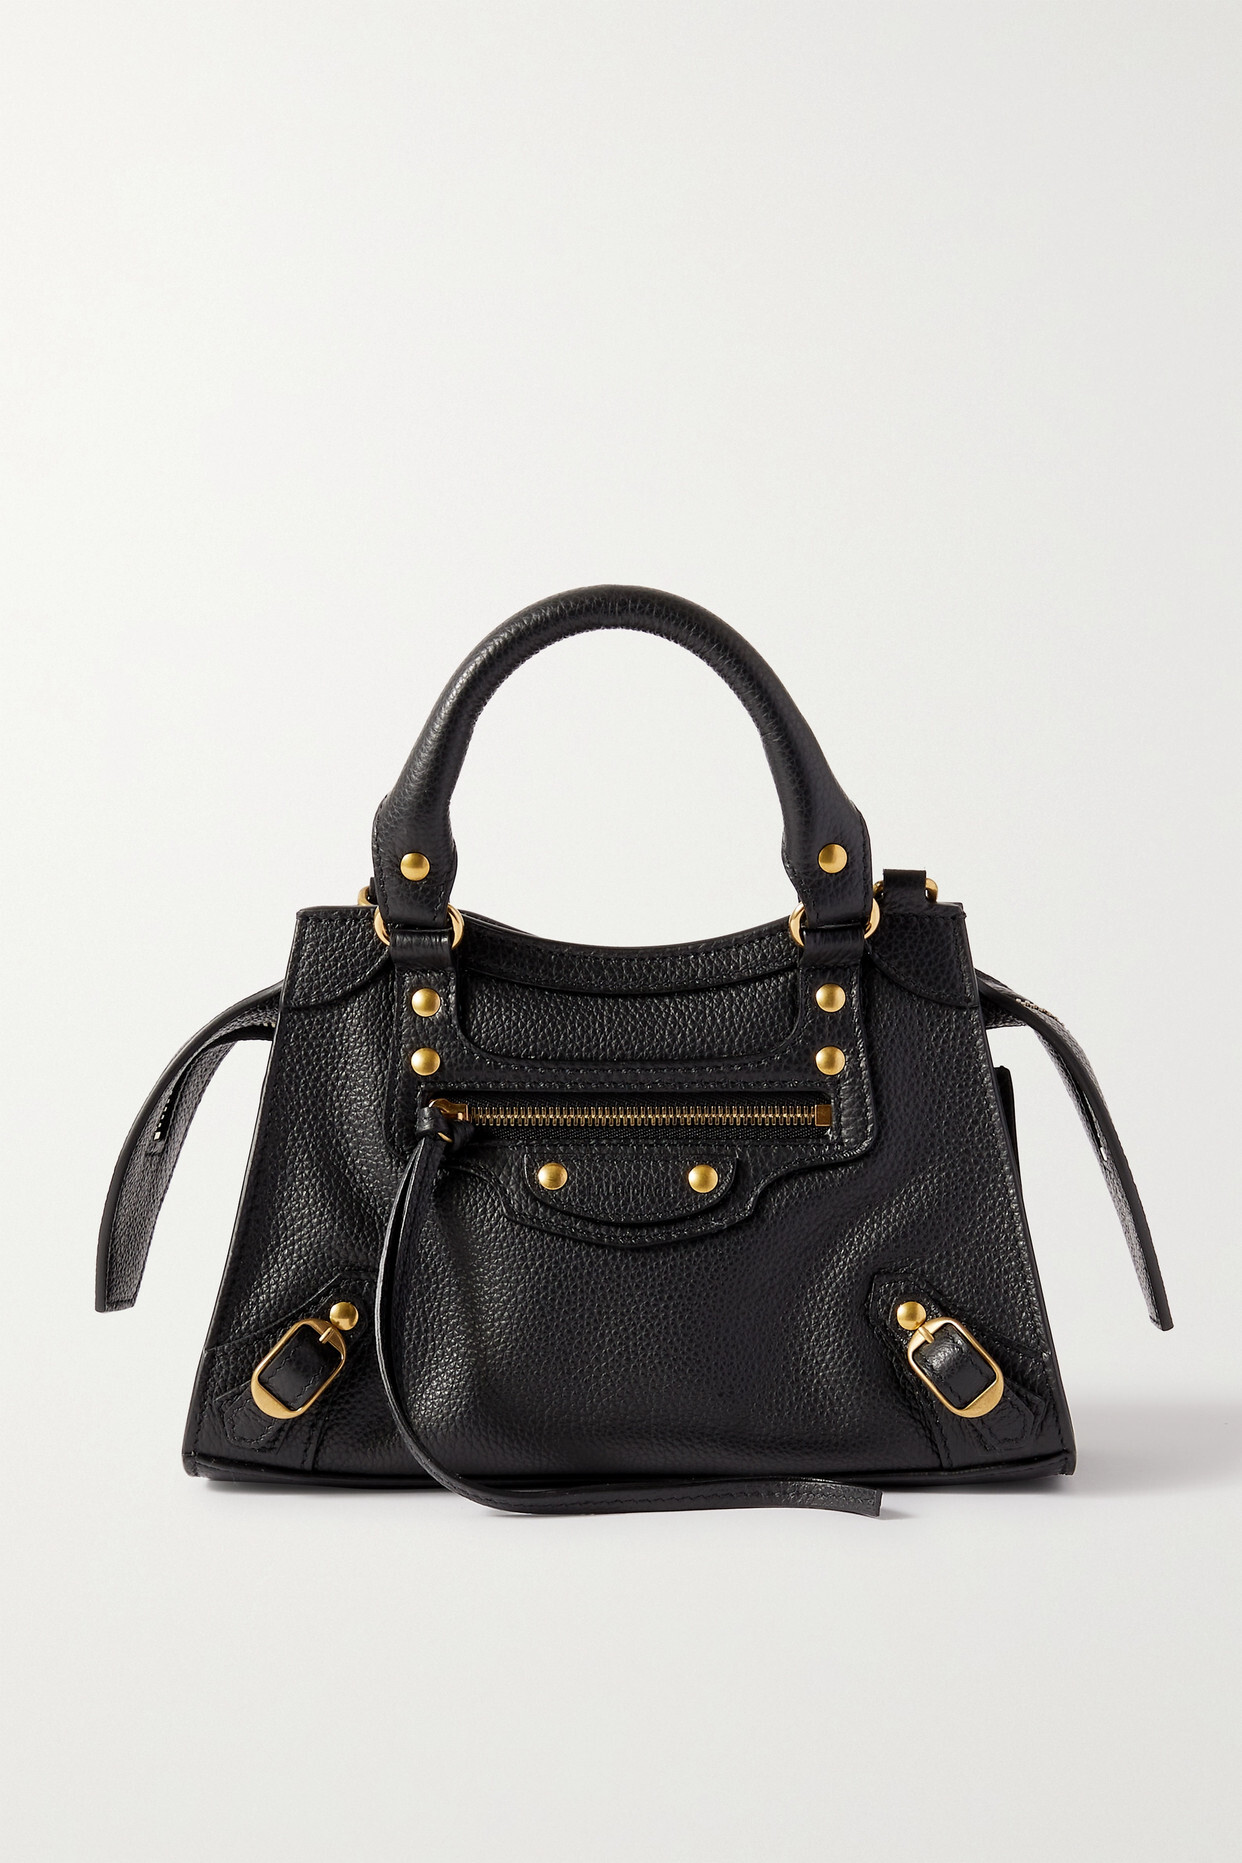 Balenciaga - Neo Classic City Mini Textured-leather Tote - Black